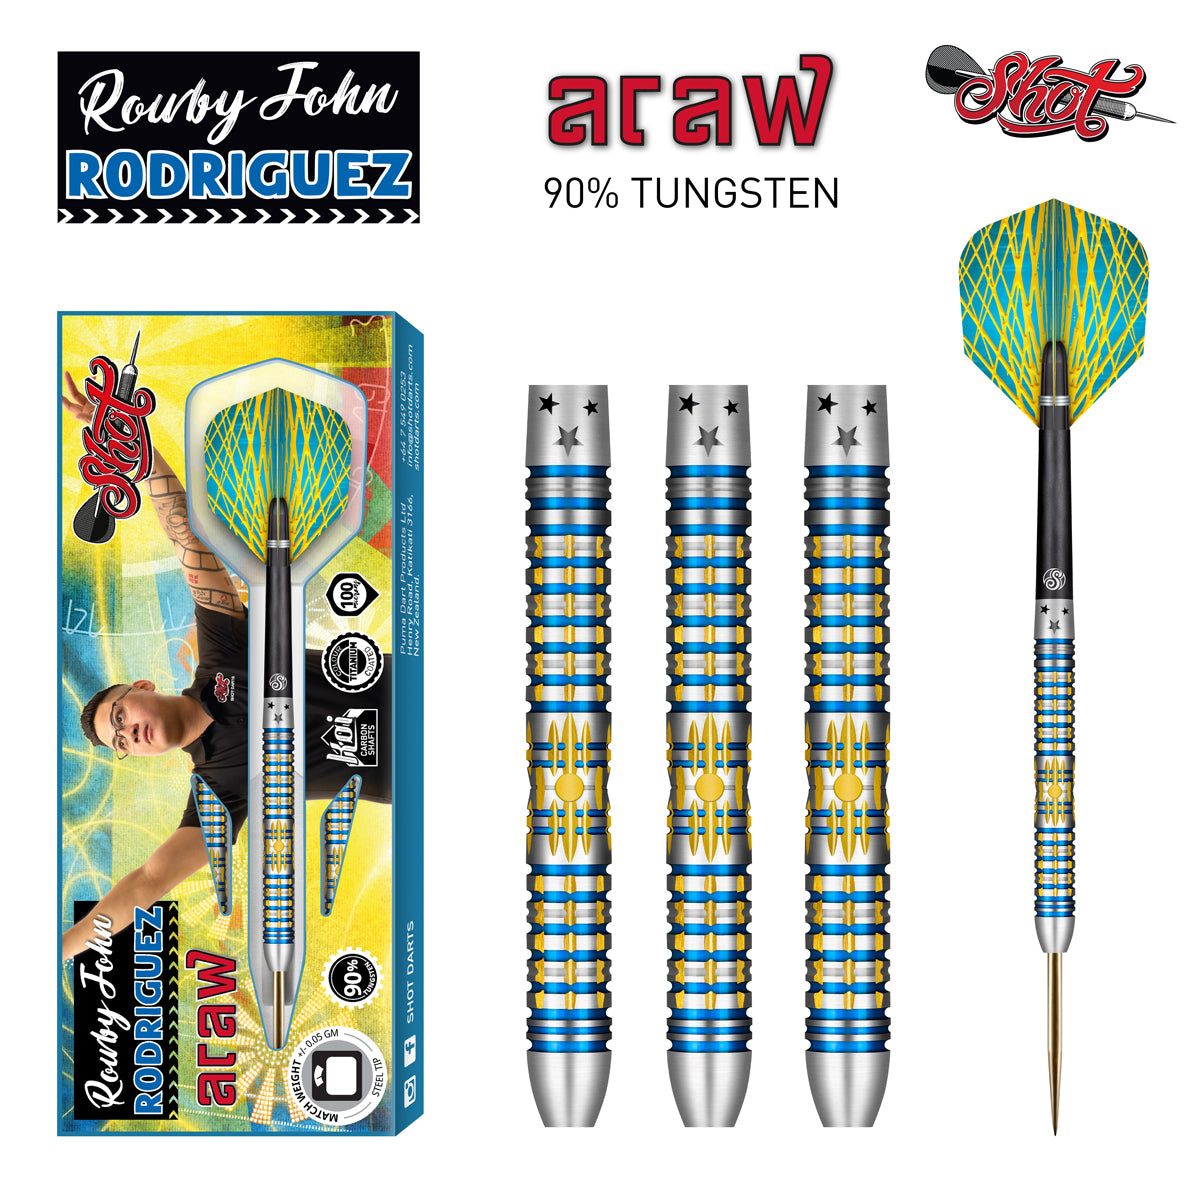 Shot Rowby-John Rodriguez Araw Steel Tip Dart Set - 90% Tungsten